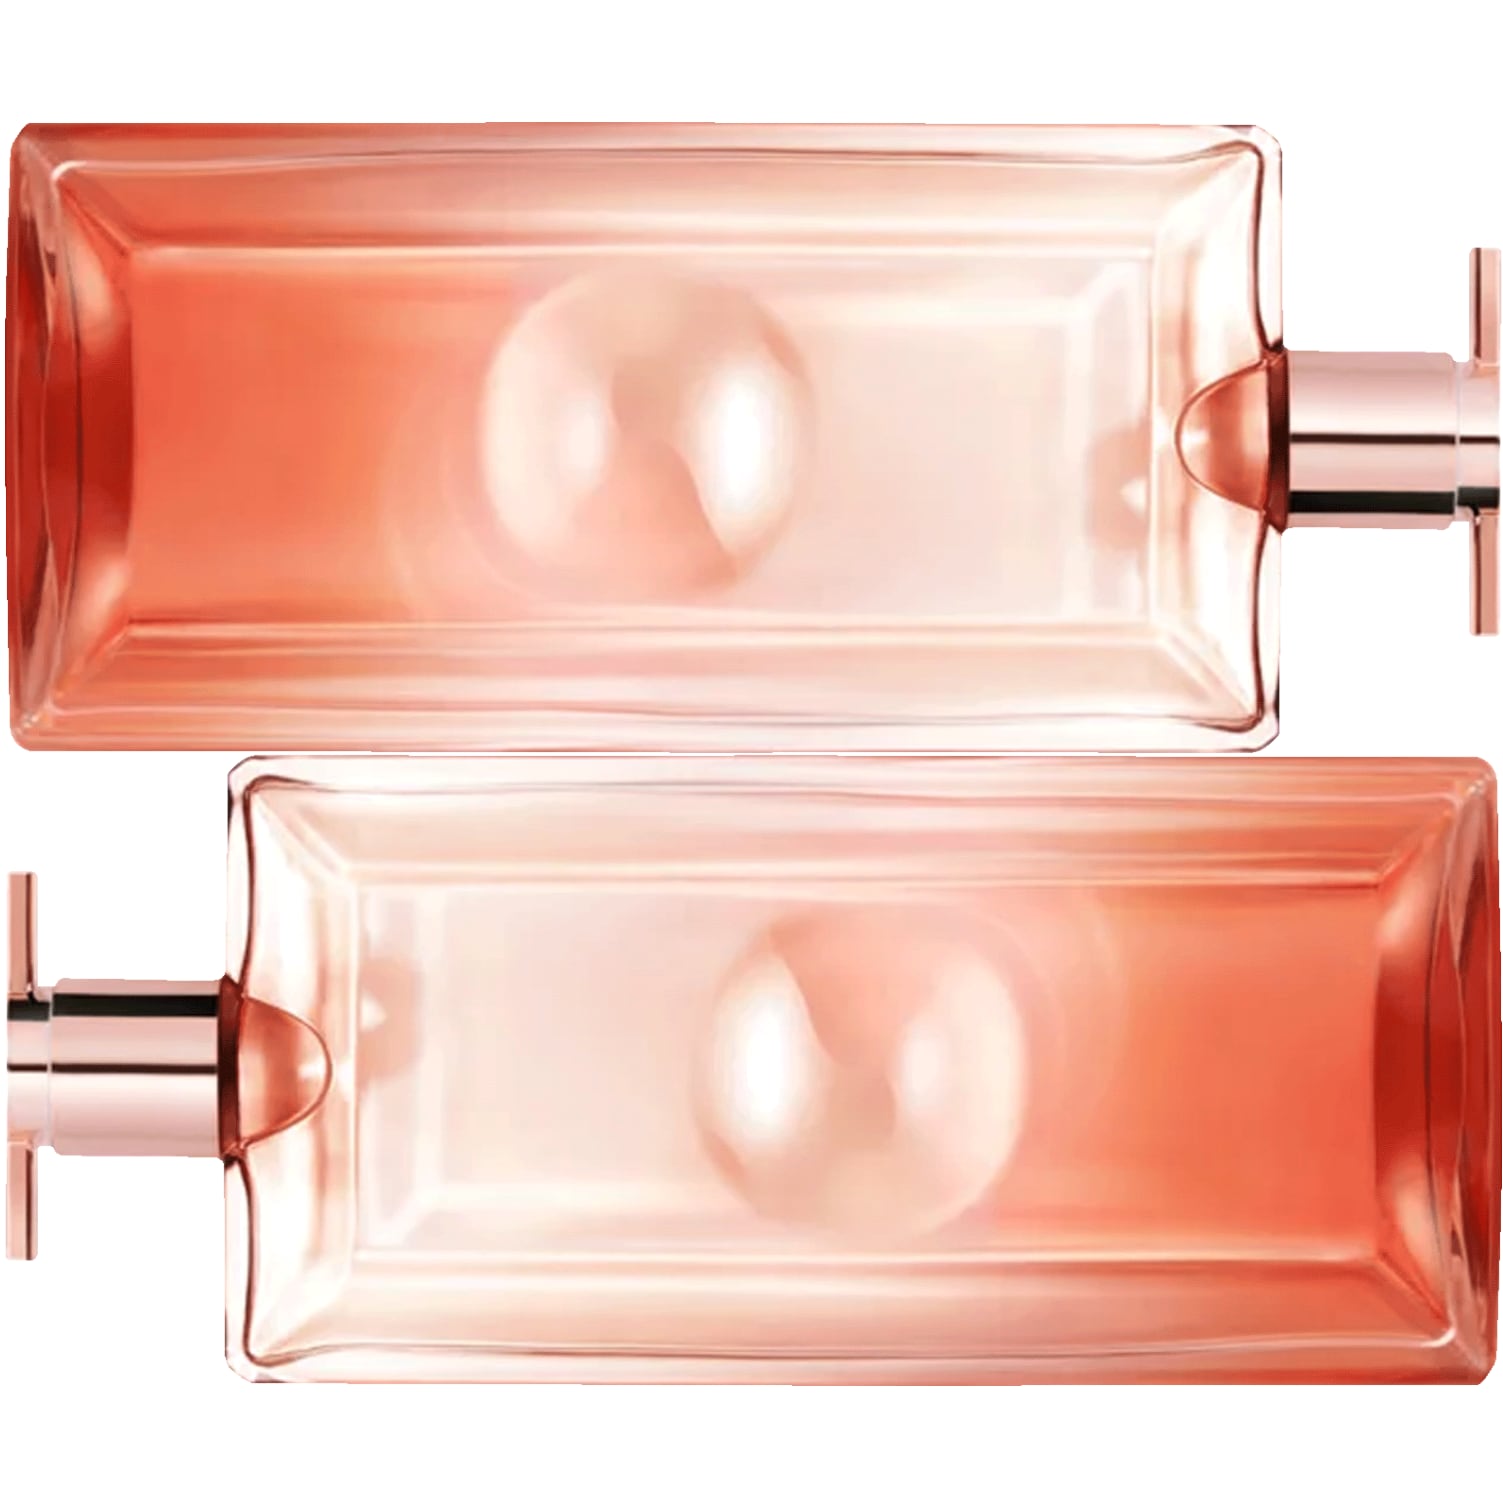 Free Lancôme Idôle Now Fragrance For Women